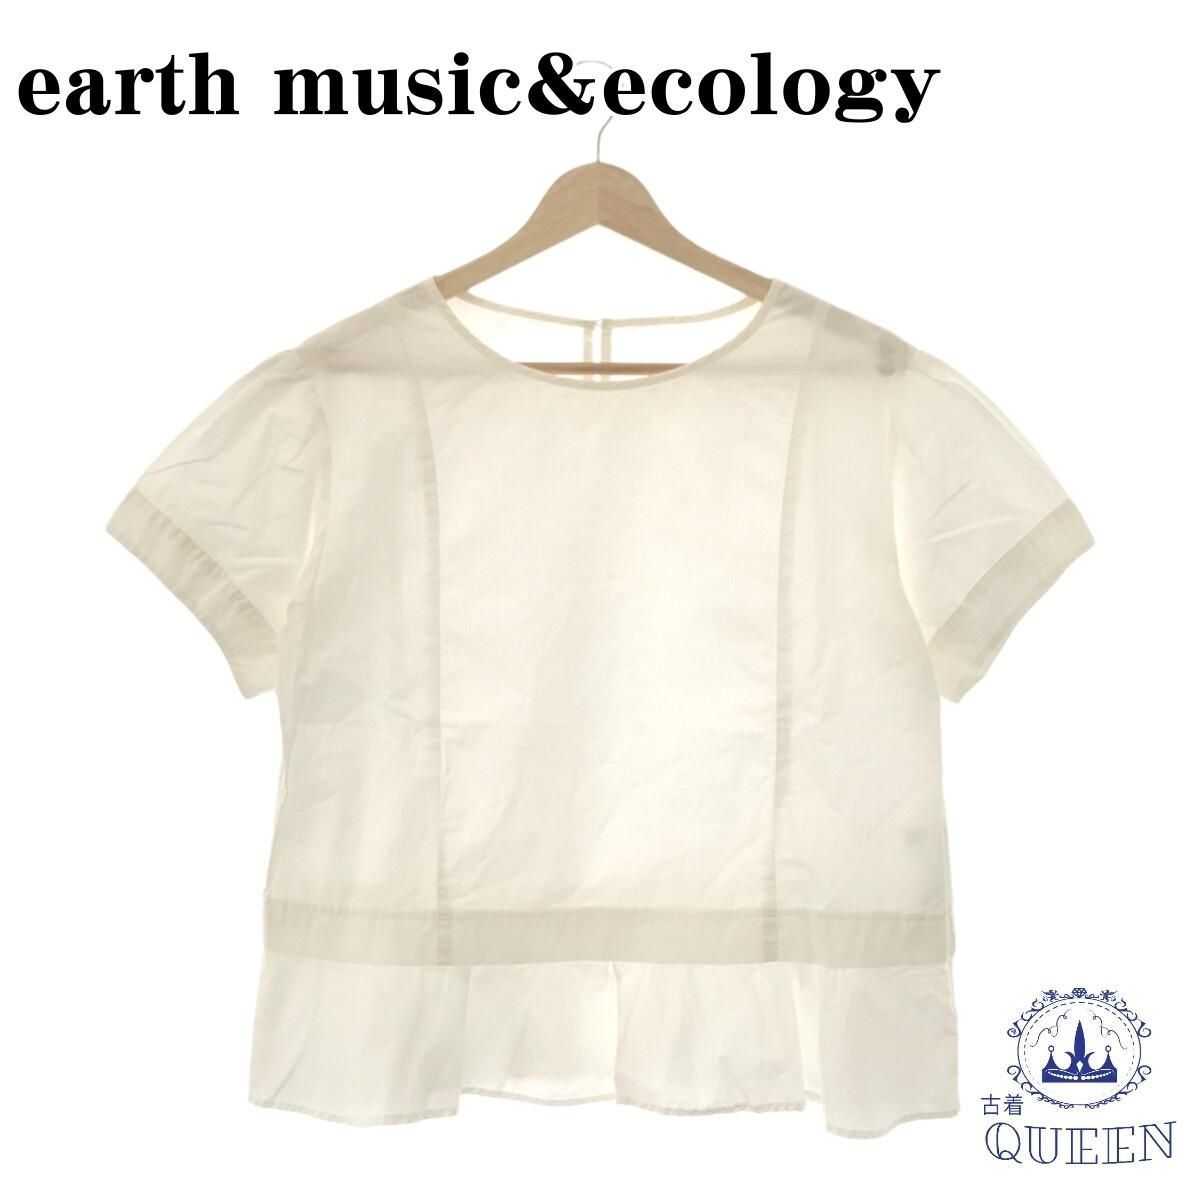 earthmusic&ecology トップス レディース ブラウス - トップス